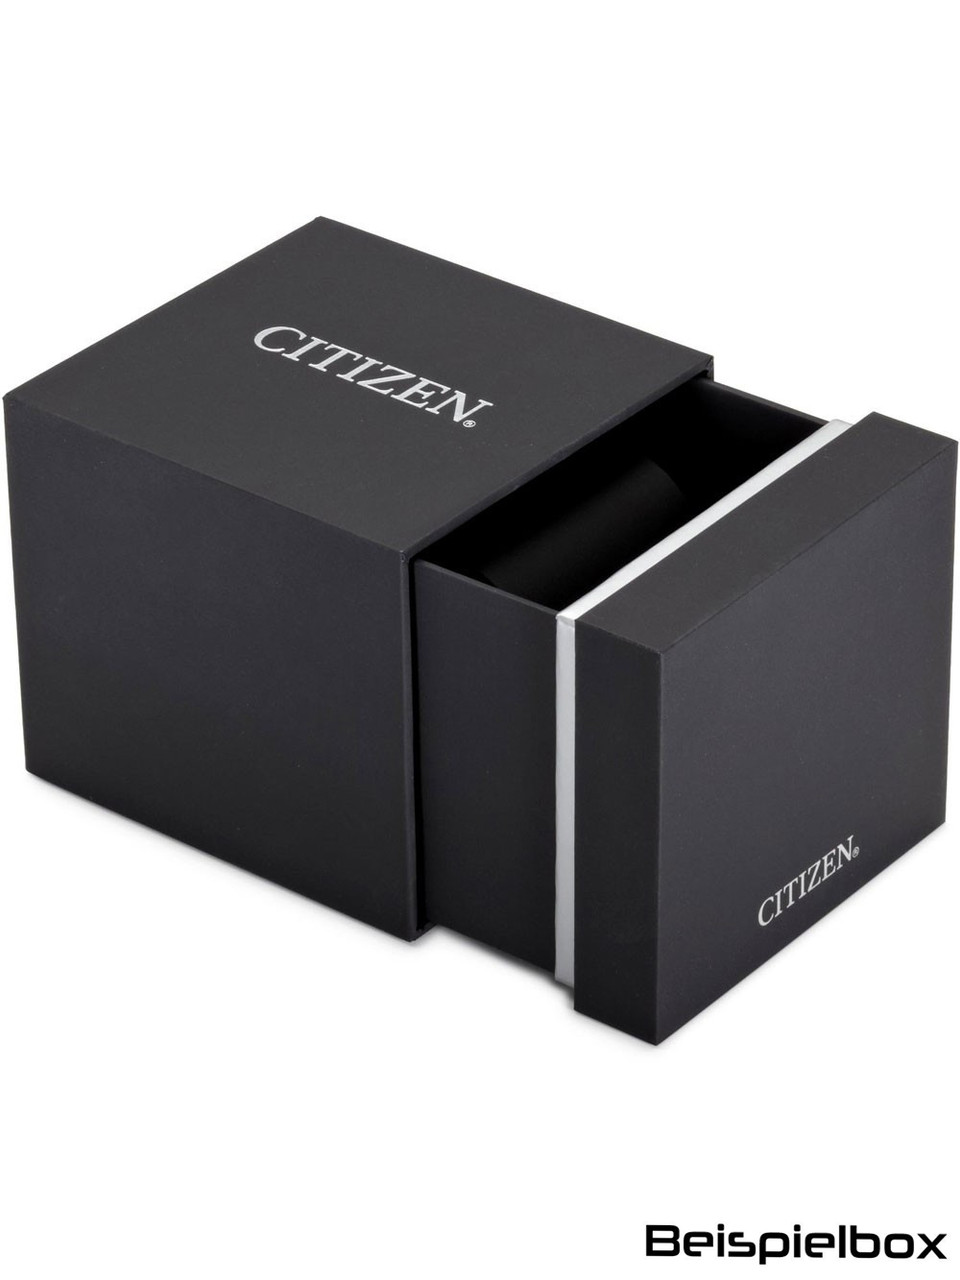 Citizen AN8194-51L Quarz Chronograph 42mm 10ATM - owlica | Genuine Watches